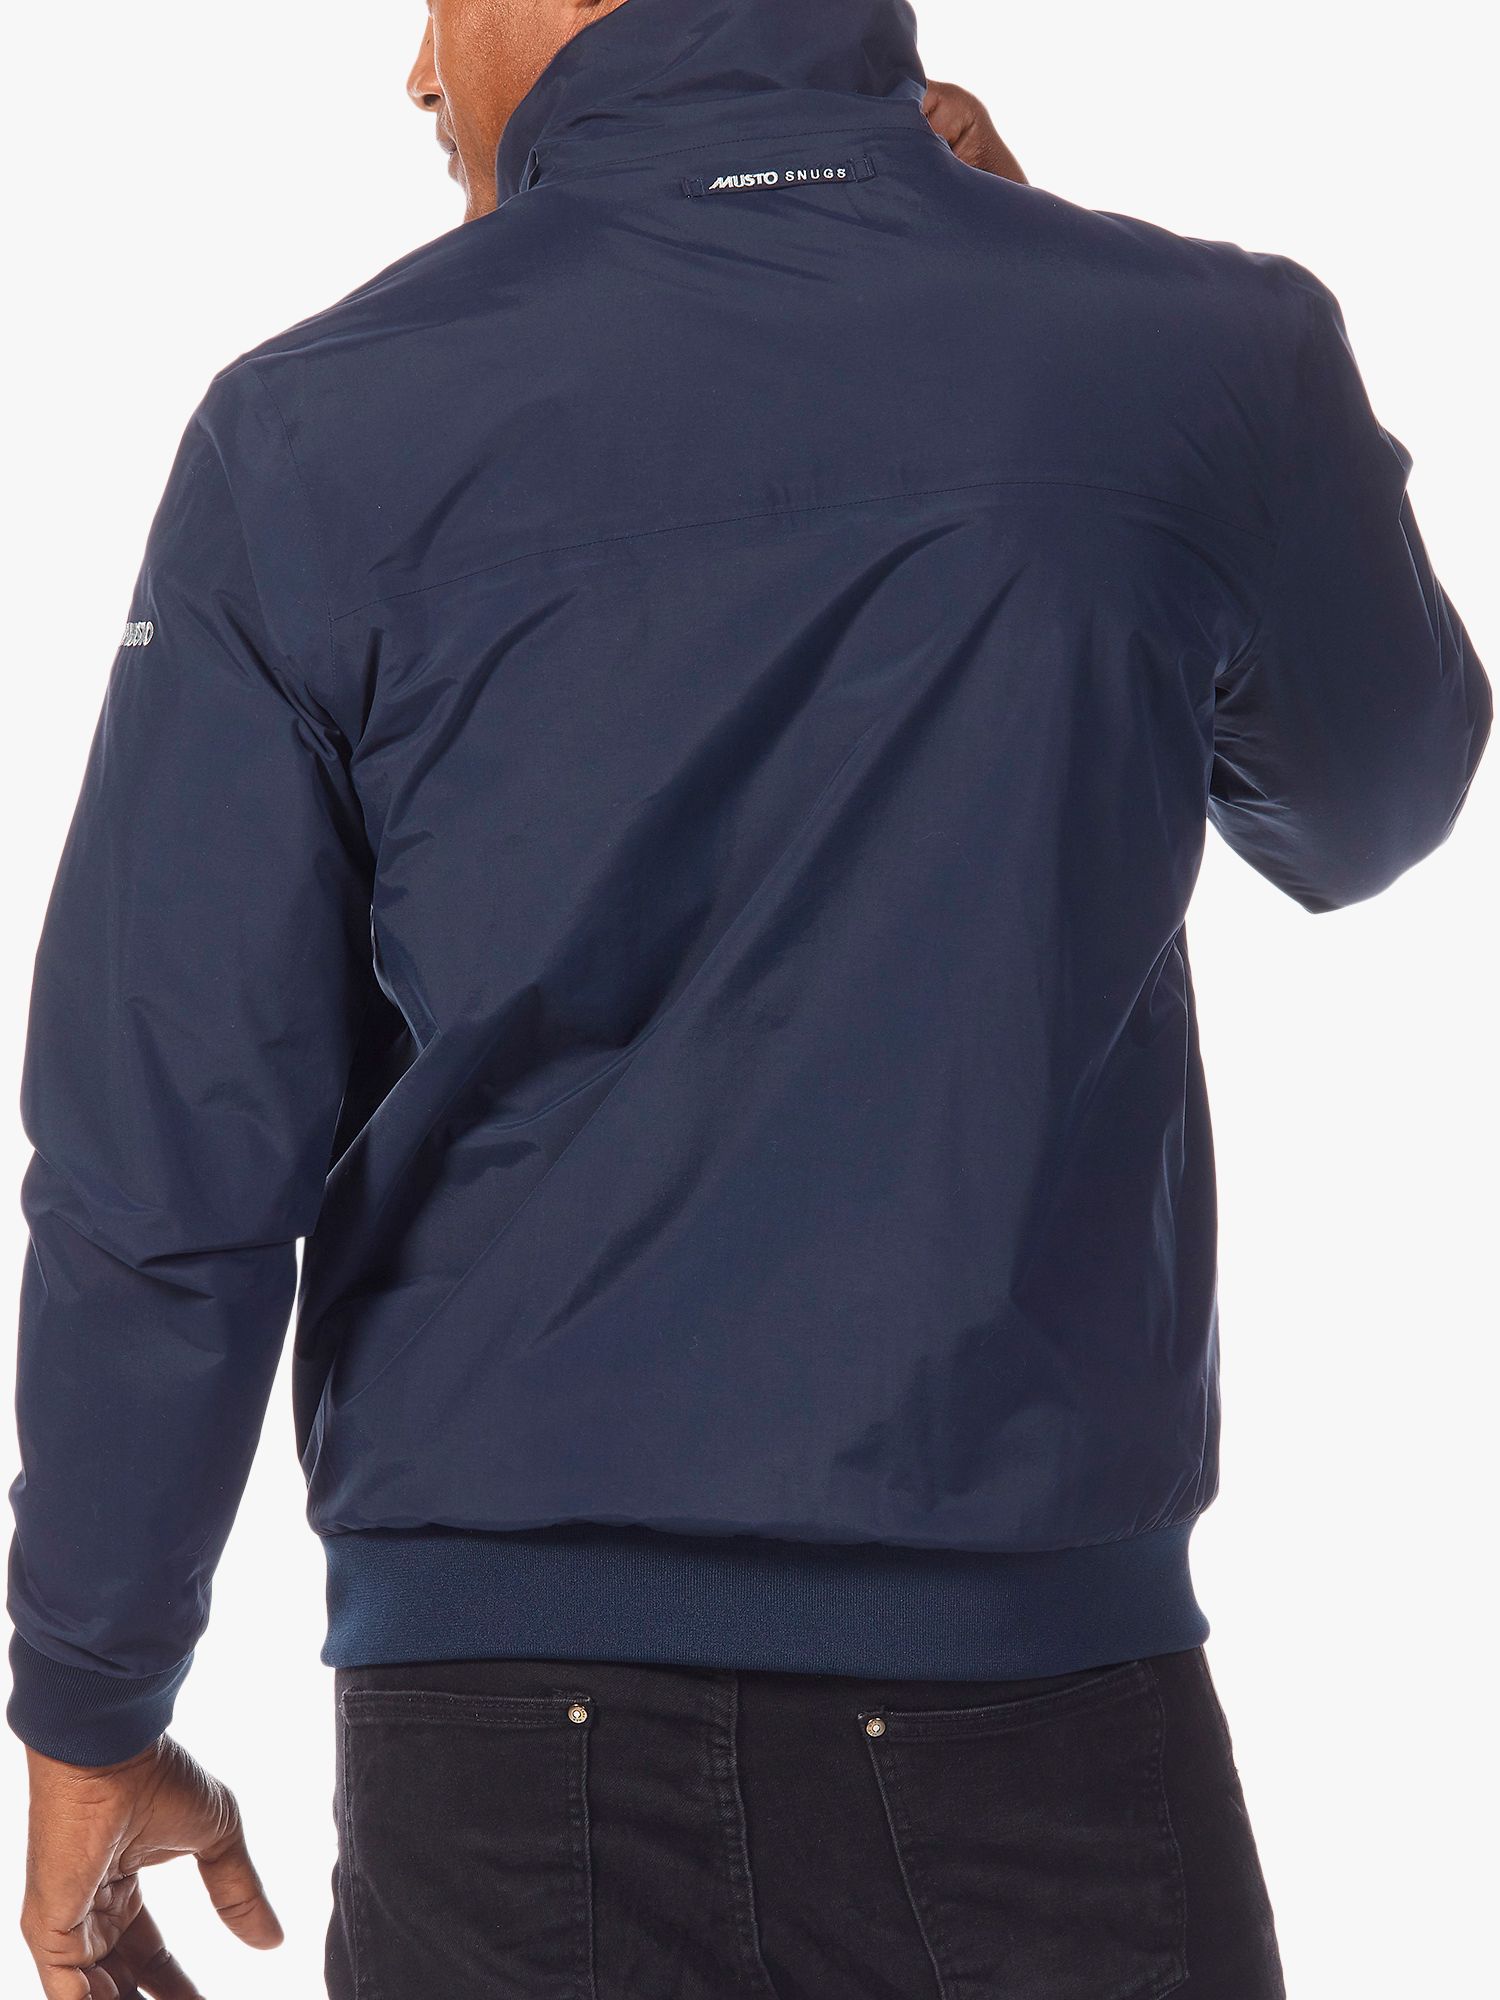 Musto Classic Snug Blouson 2.0 Men's Jacket, Navy/Carbon, S